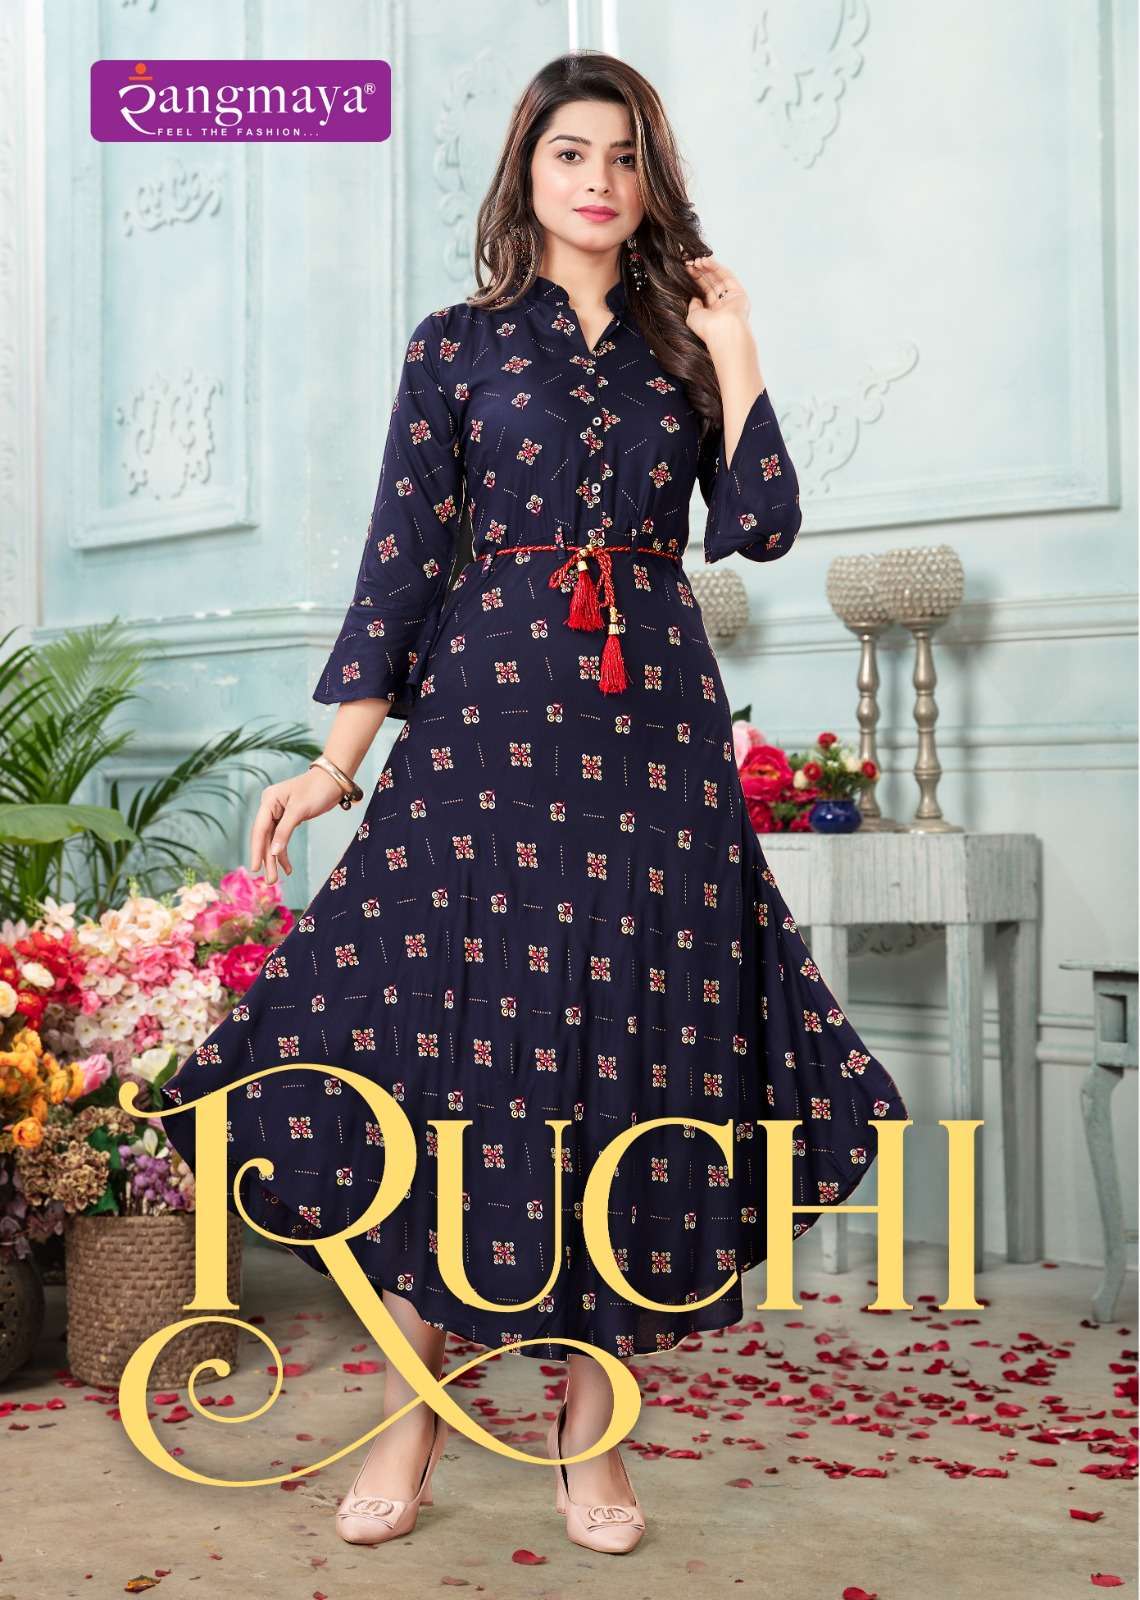 Rangmaya RUCHI printed  Kurti Wholesale india